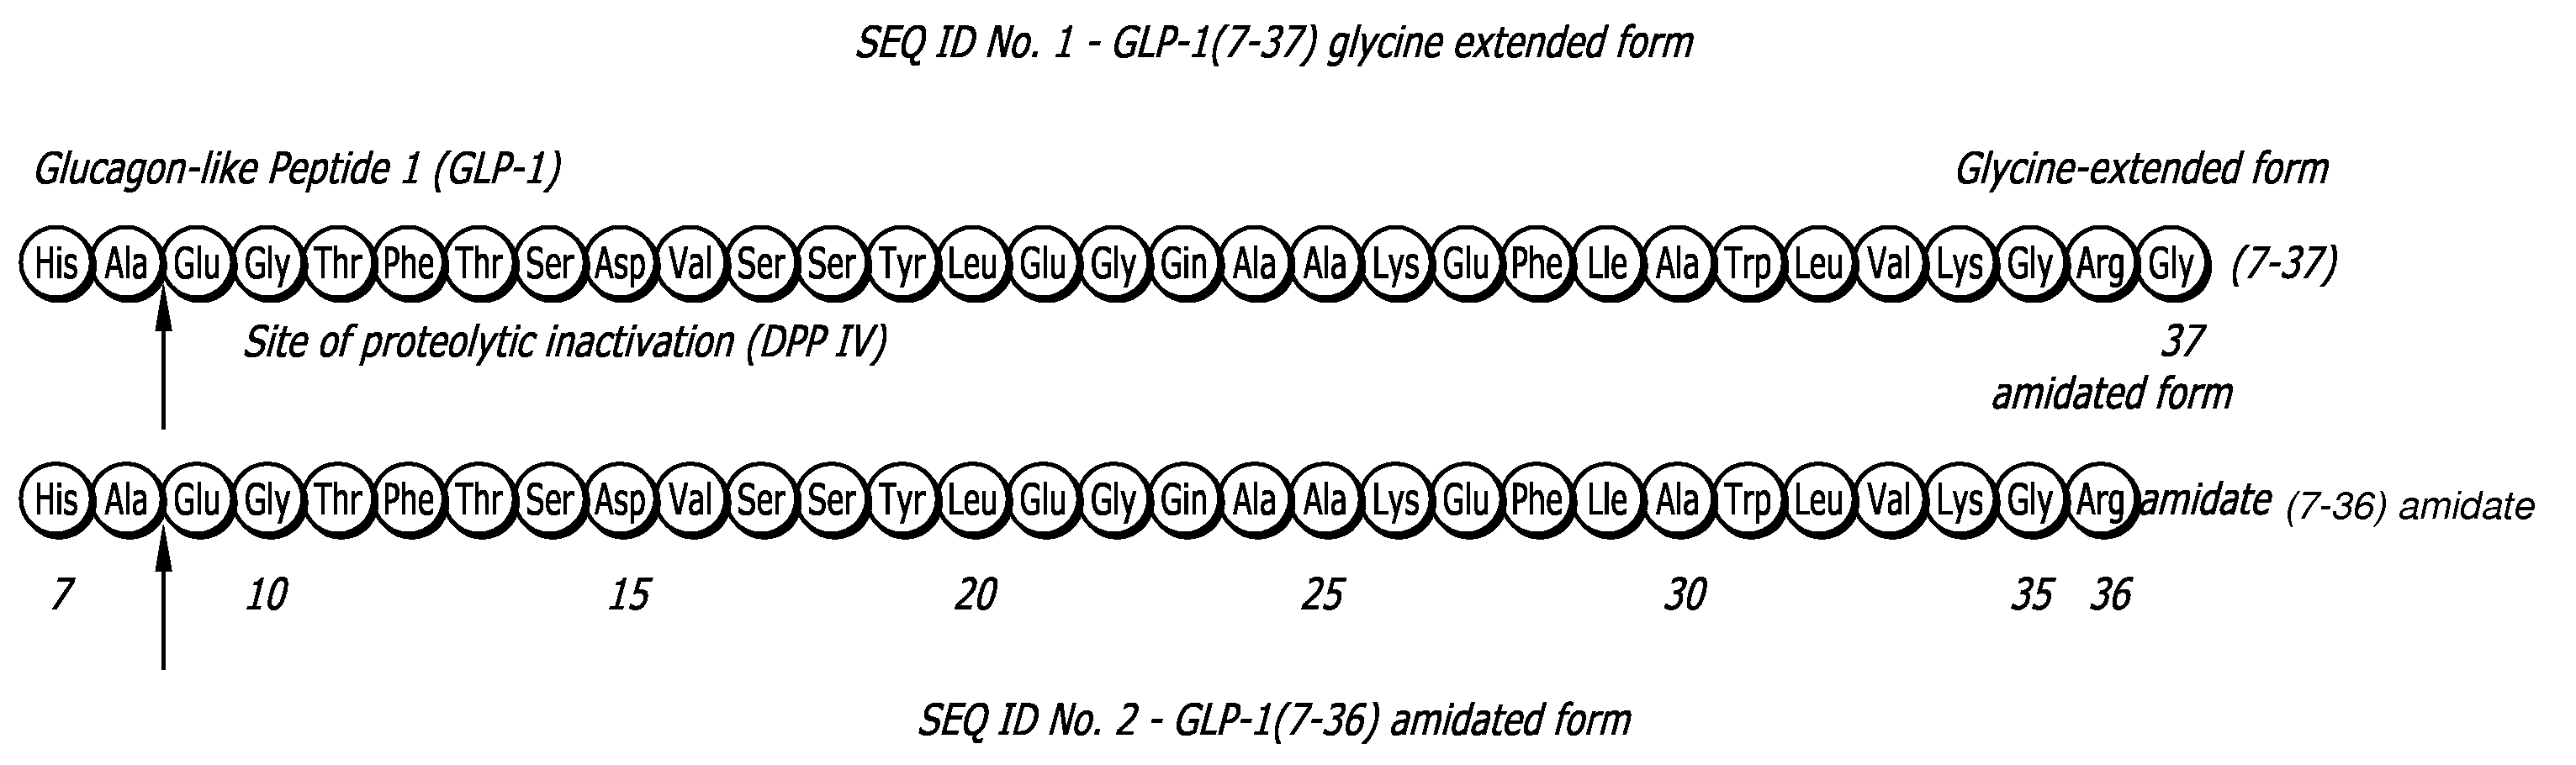 Glucagon-like peptide 1 (glp-1) pharmaceutical formulations